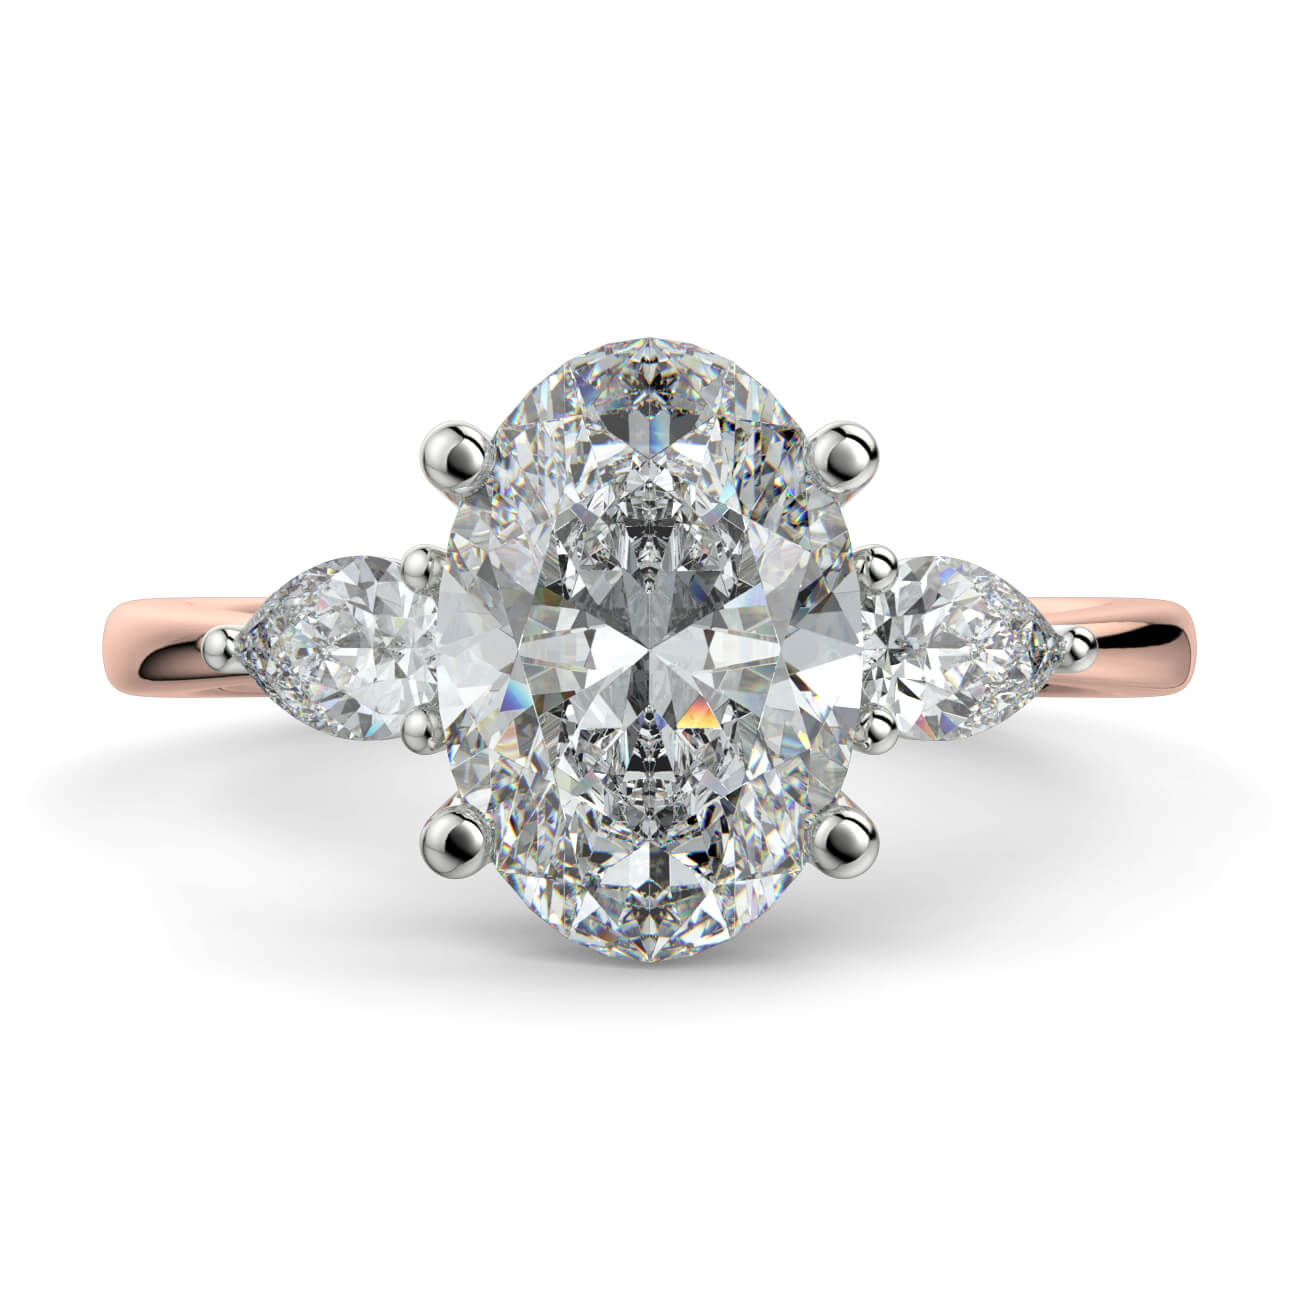 Oval Shape Diamond Ring With Pear Shape Side Diamonds In 18k Rose & White Gold – Australian Diamond Network